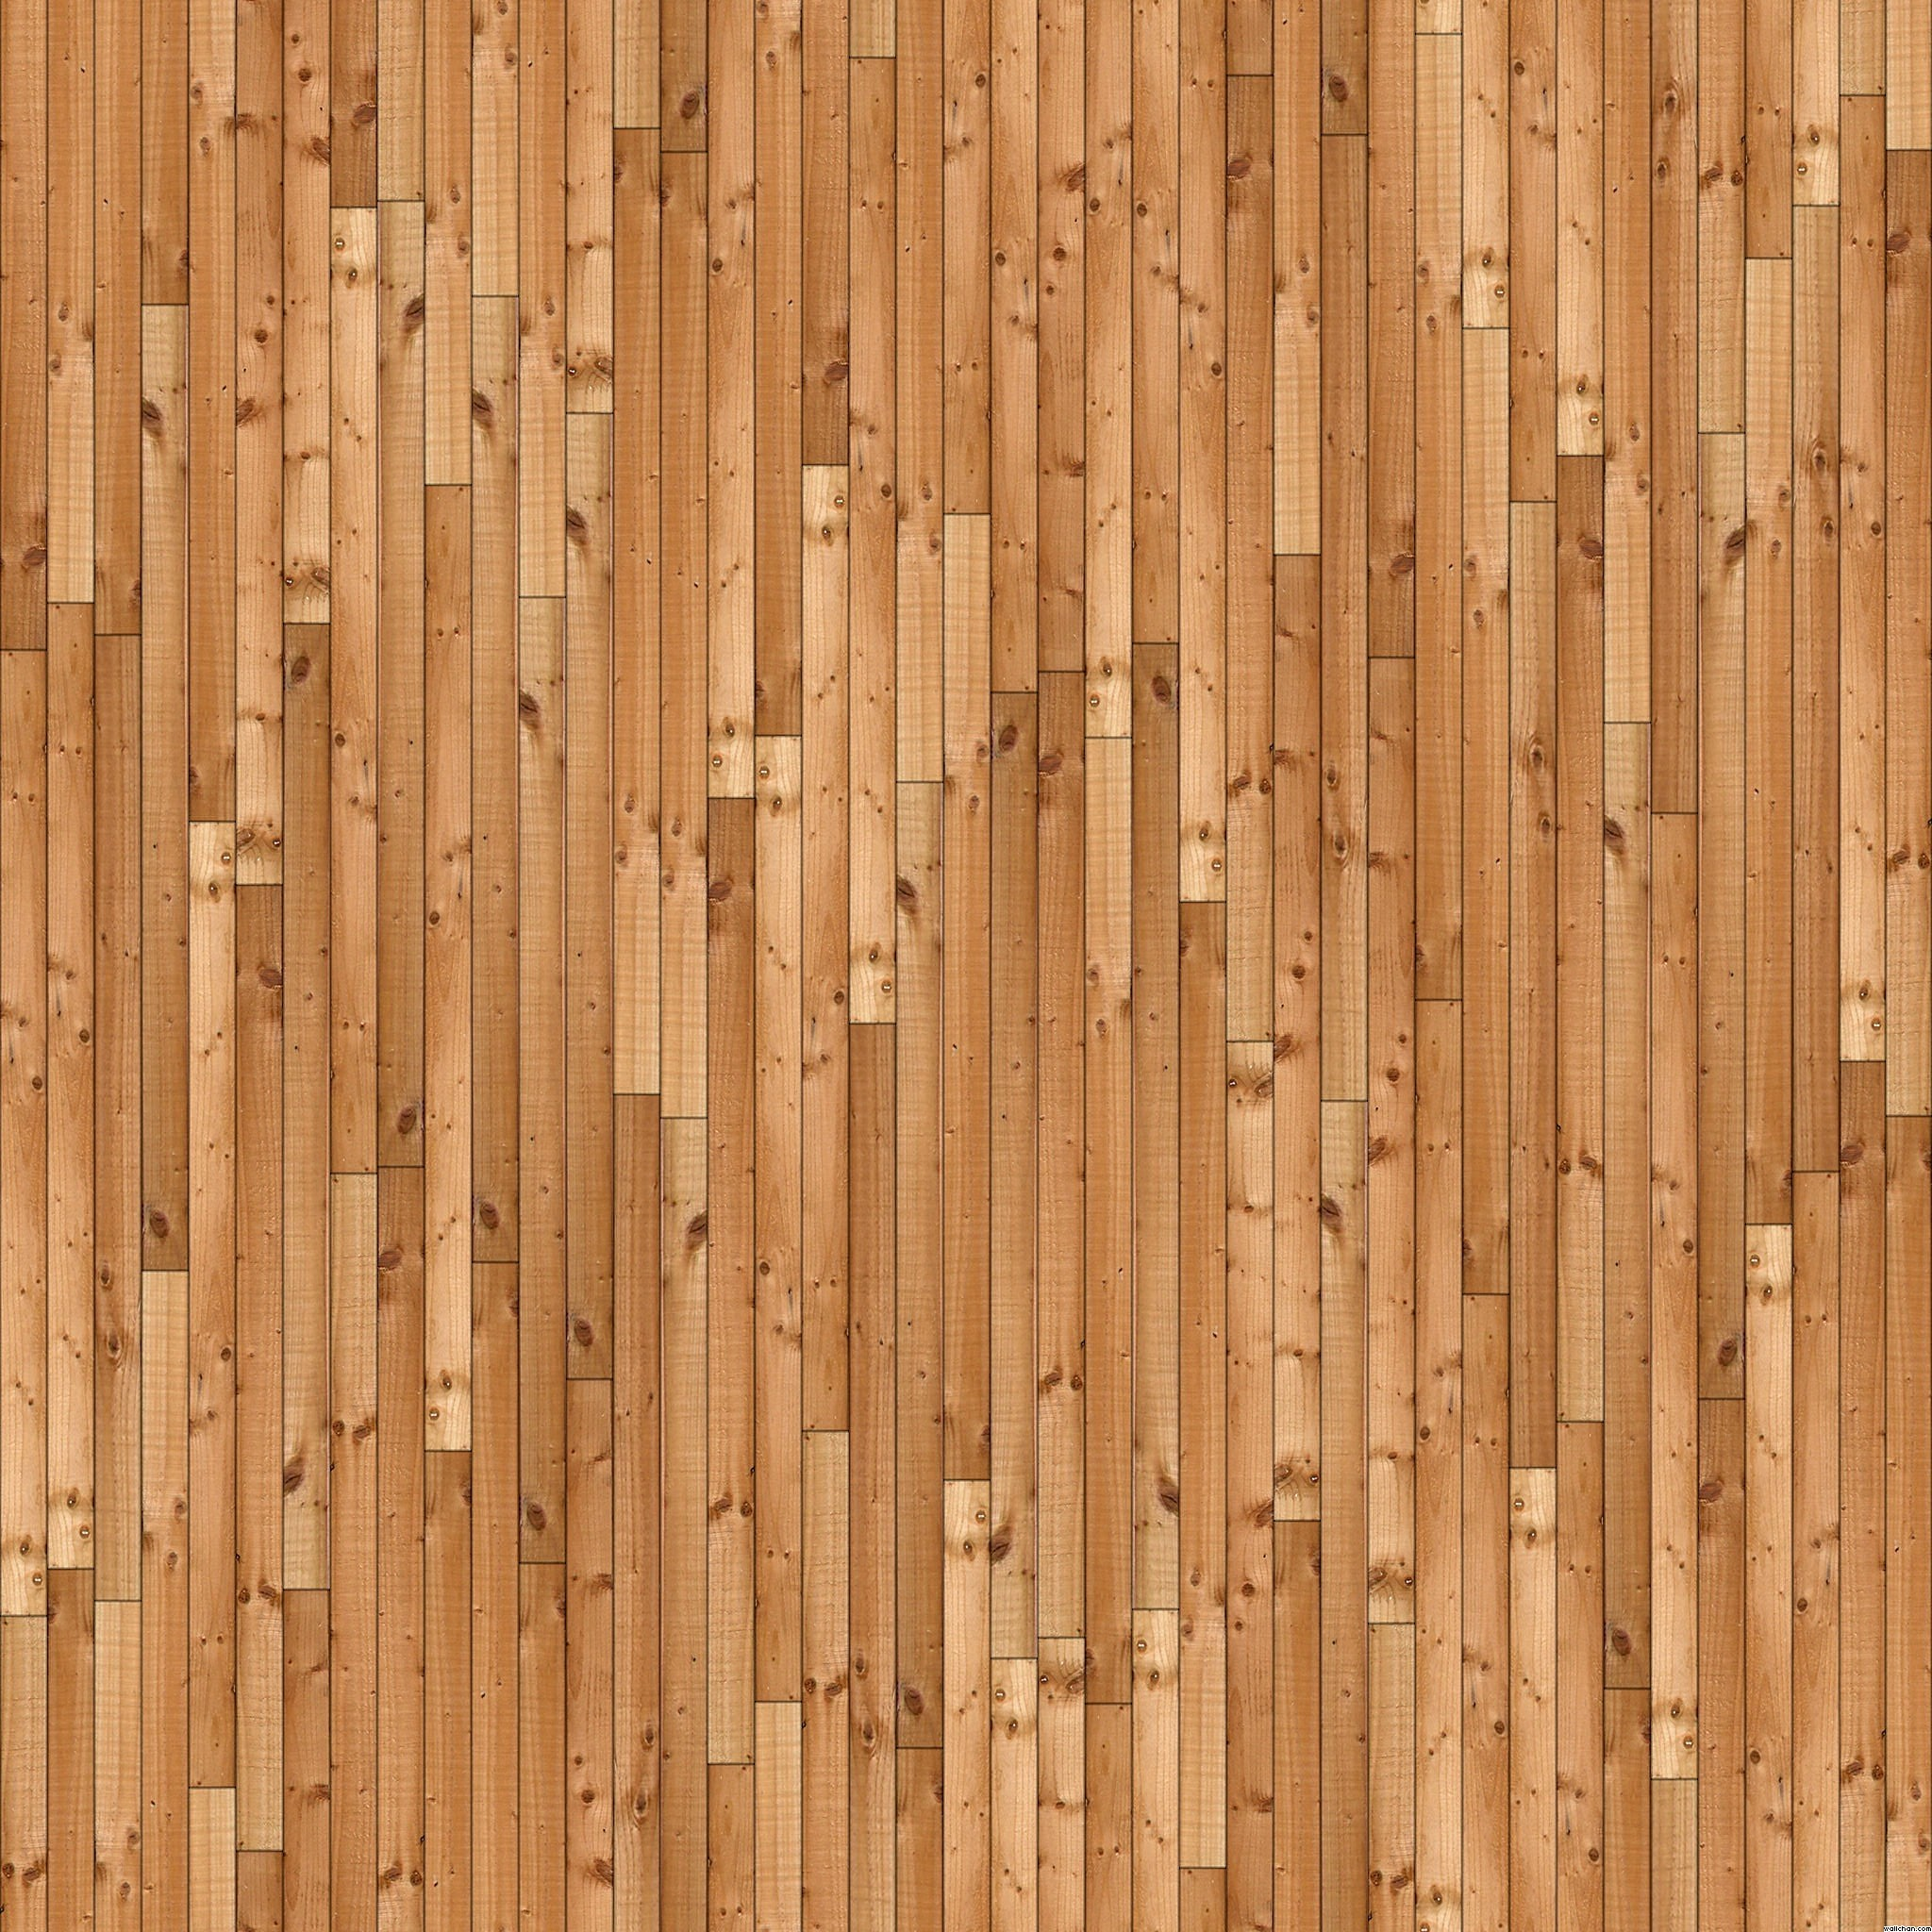 Newest iPad Wallpaper HD Textures Wood Texture